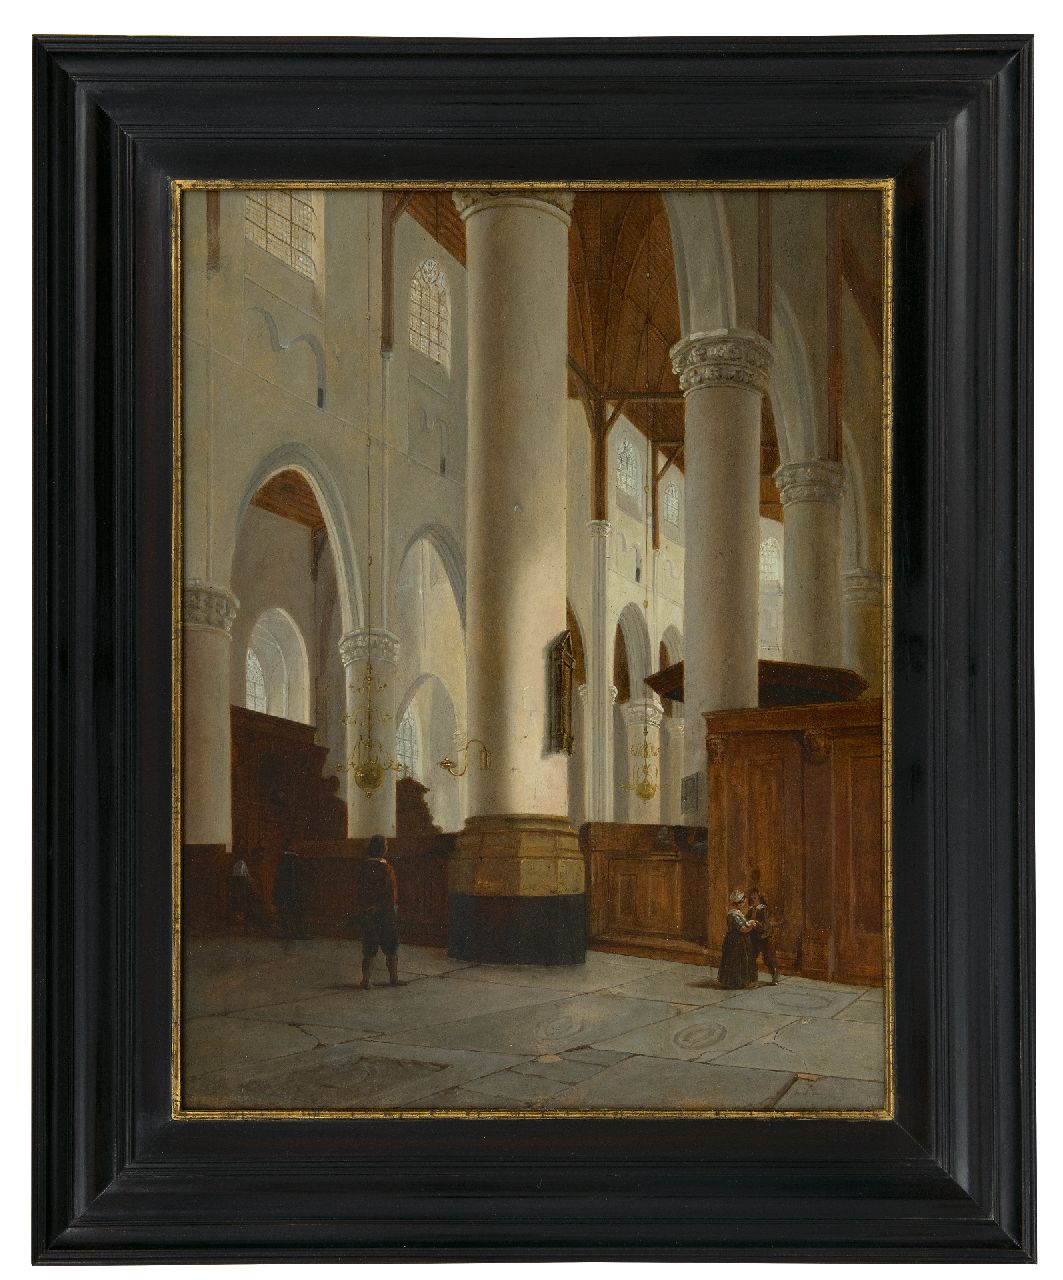 Tetar van Elven J.B.  | Jan 'Johannes' Baptist Tetar van Elven | Paintings offered for sale | Interior of the Laurenschurch in Rotterdam, oil on panel 42.8 x 33.3 cm, signed l.l. with initials